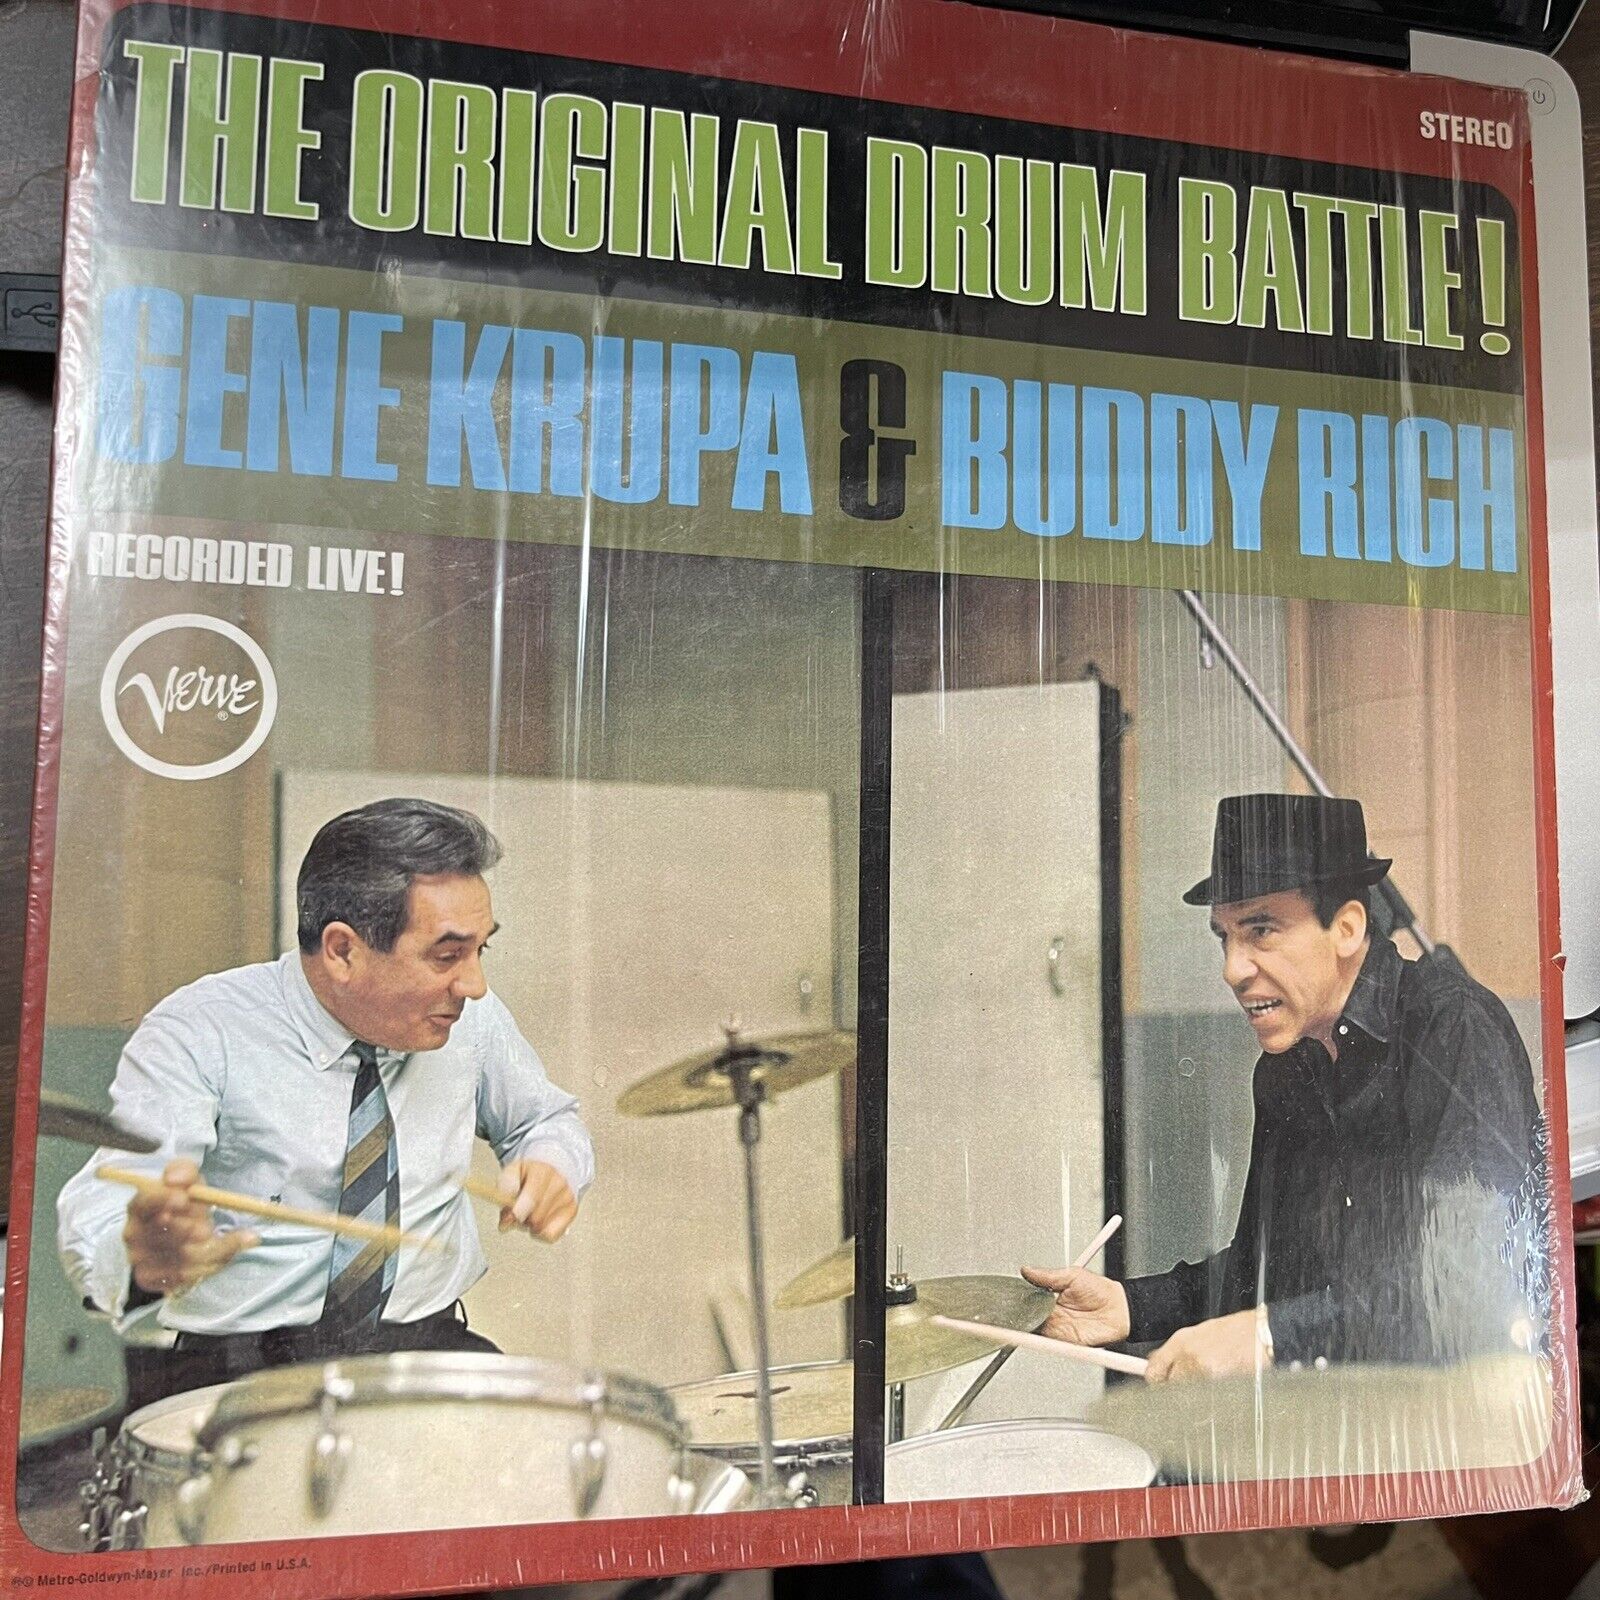 Gene Krupa & Buddy Rich The Original Drum Battle Vinyl Record LP Album NM-/VG+